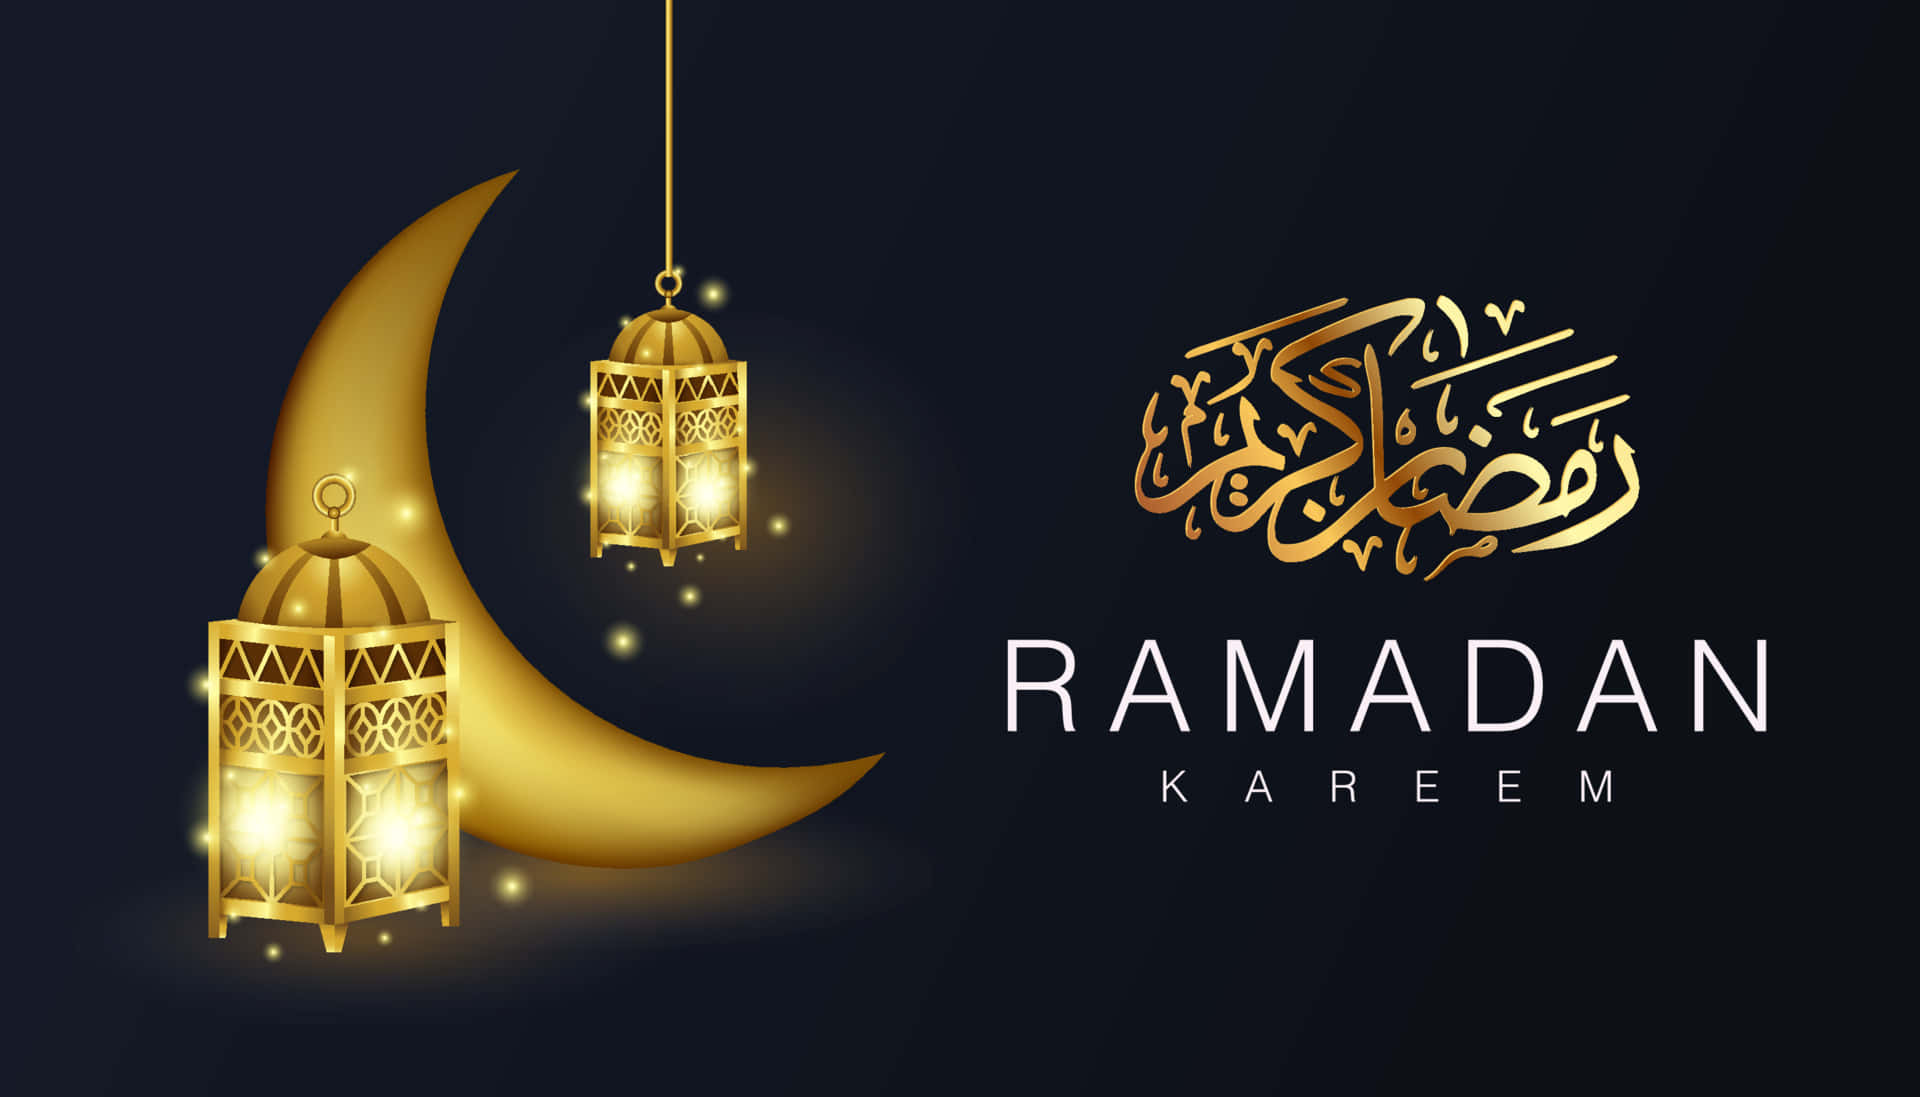 Ramadankareem!